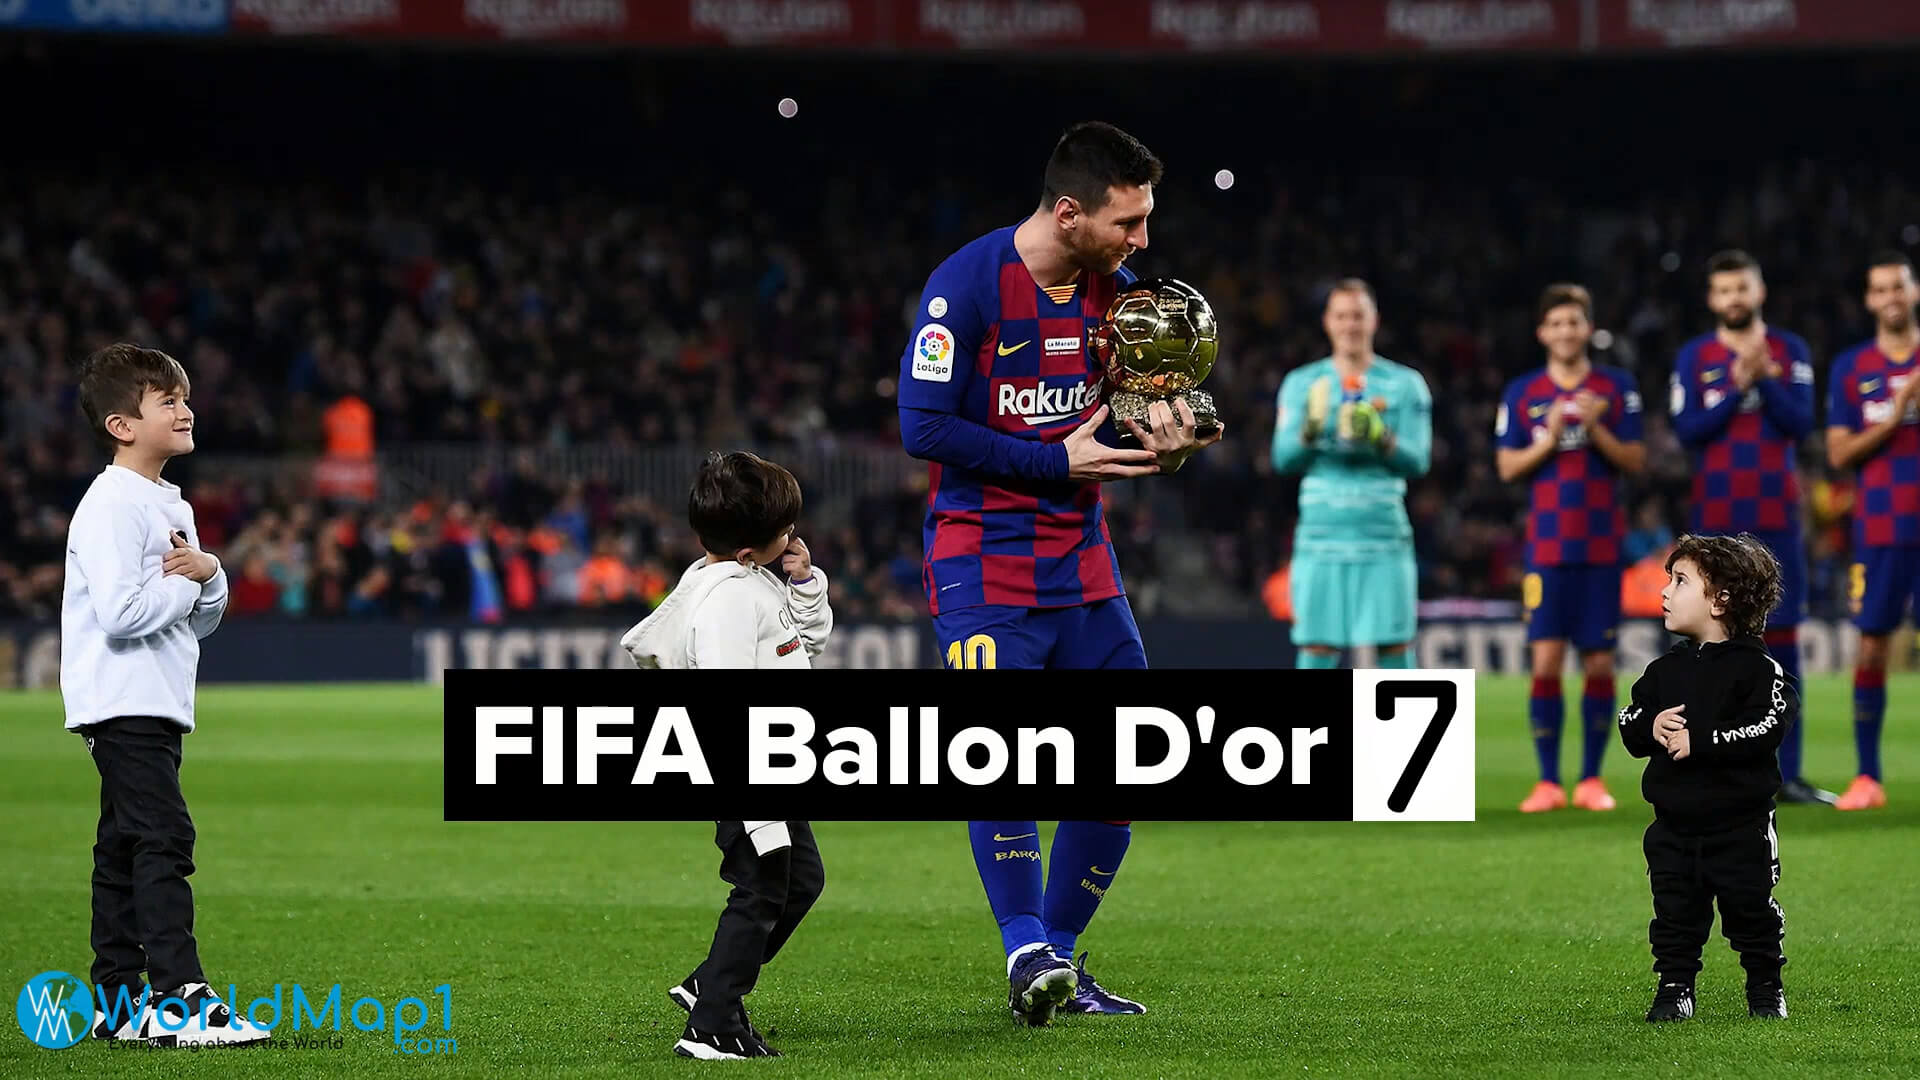 Lionel Messi Wins 7 Times FIFA Ballon d'or